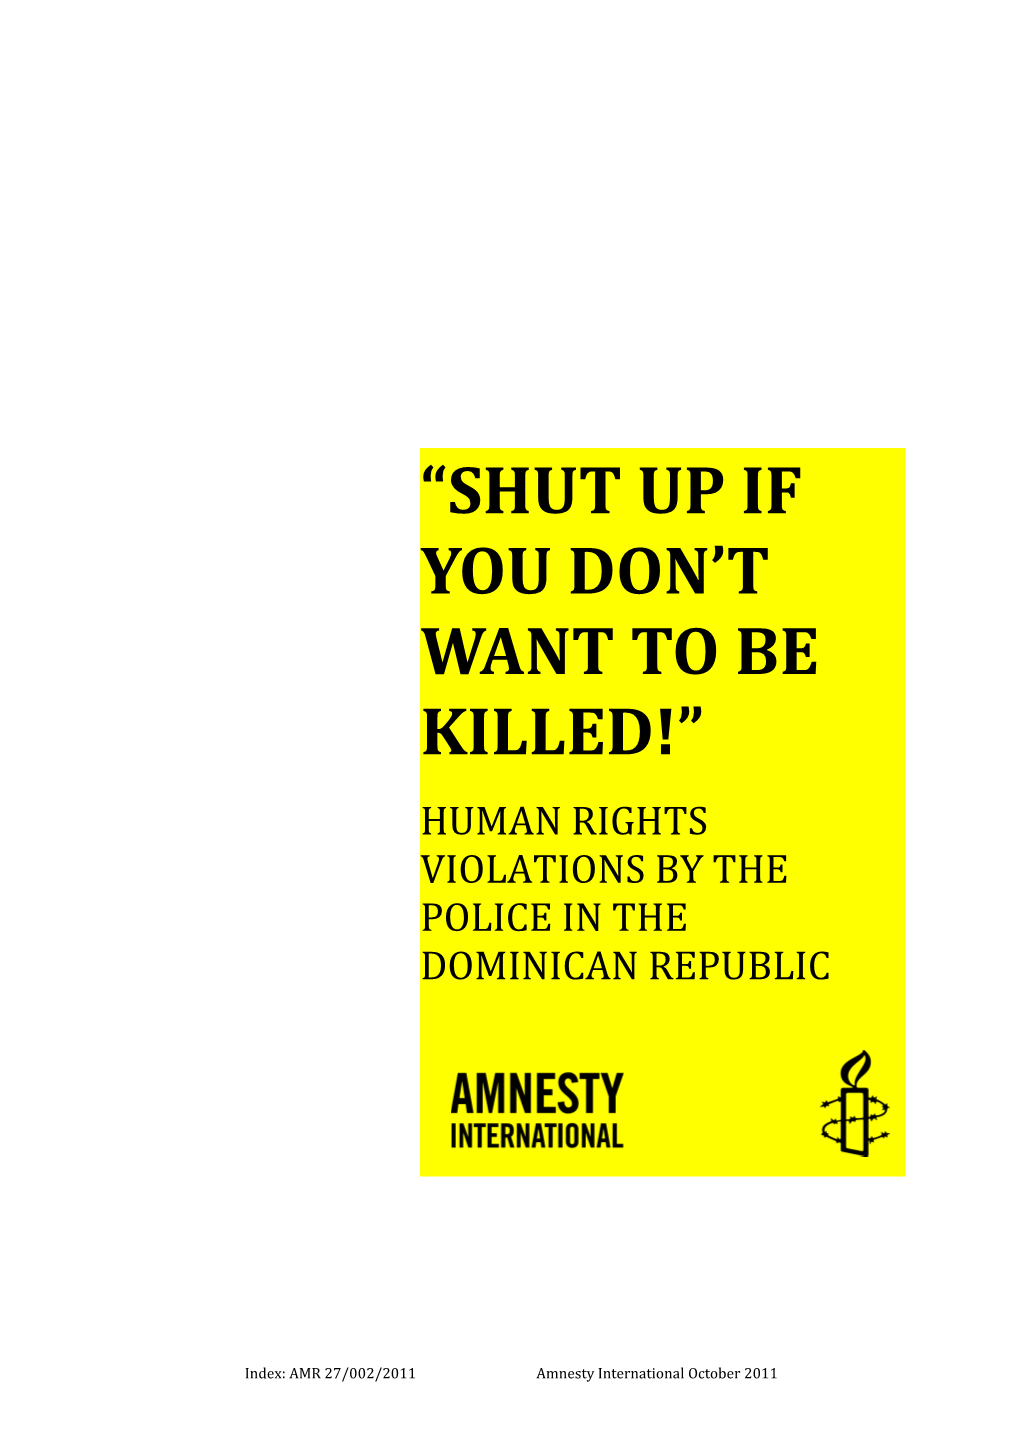 Index: AMR 27/002/2011 Amnesty International October 2011